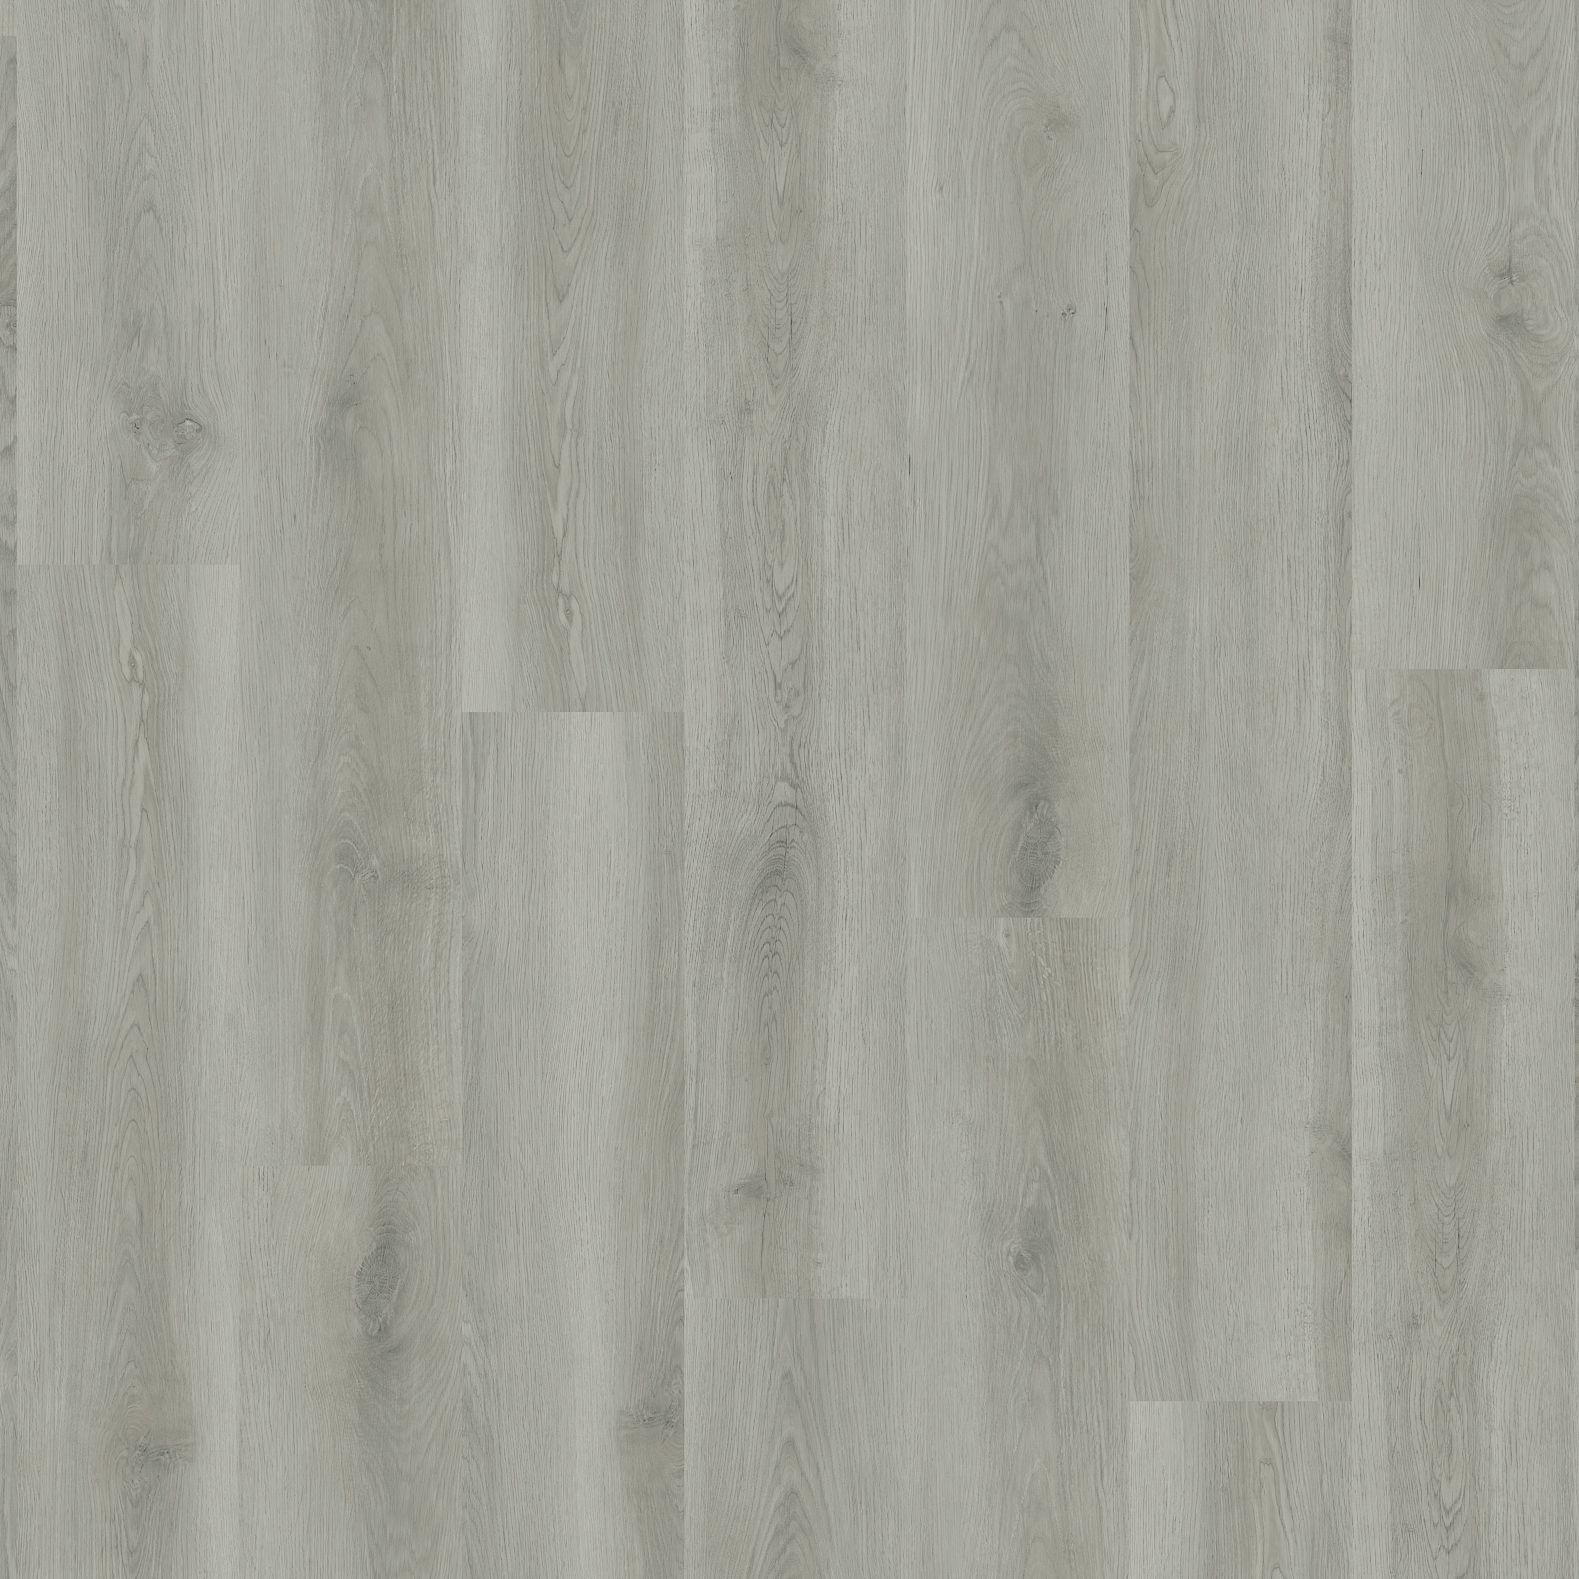 Image of Novocore Cloudy Grey Luxury Vinyl Flooring with Integrated Underlay - 2.64m2